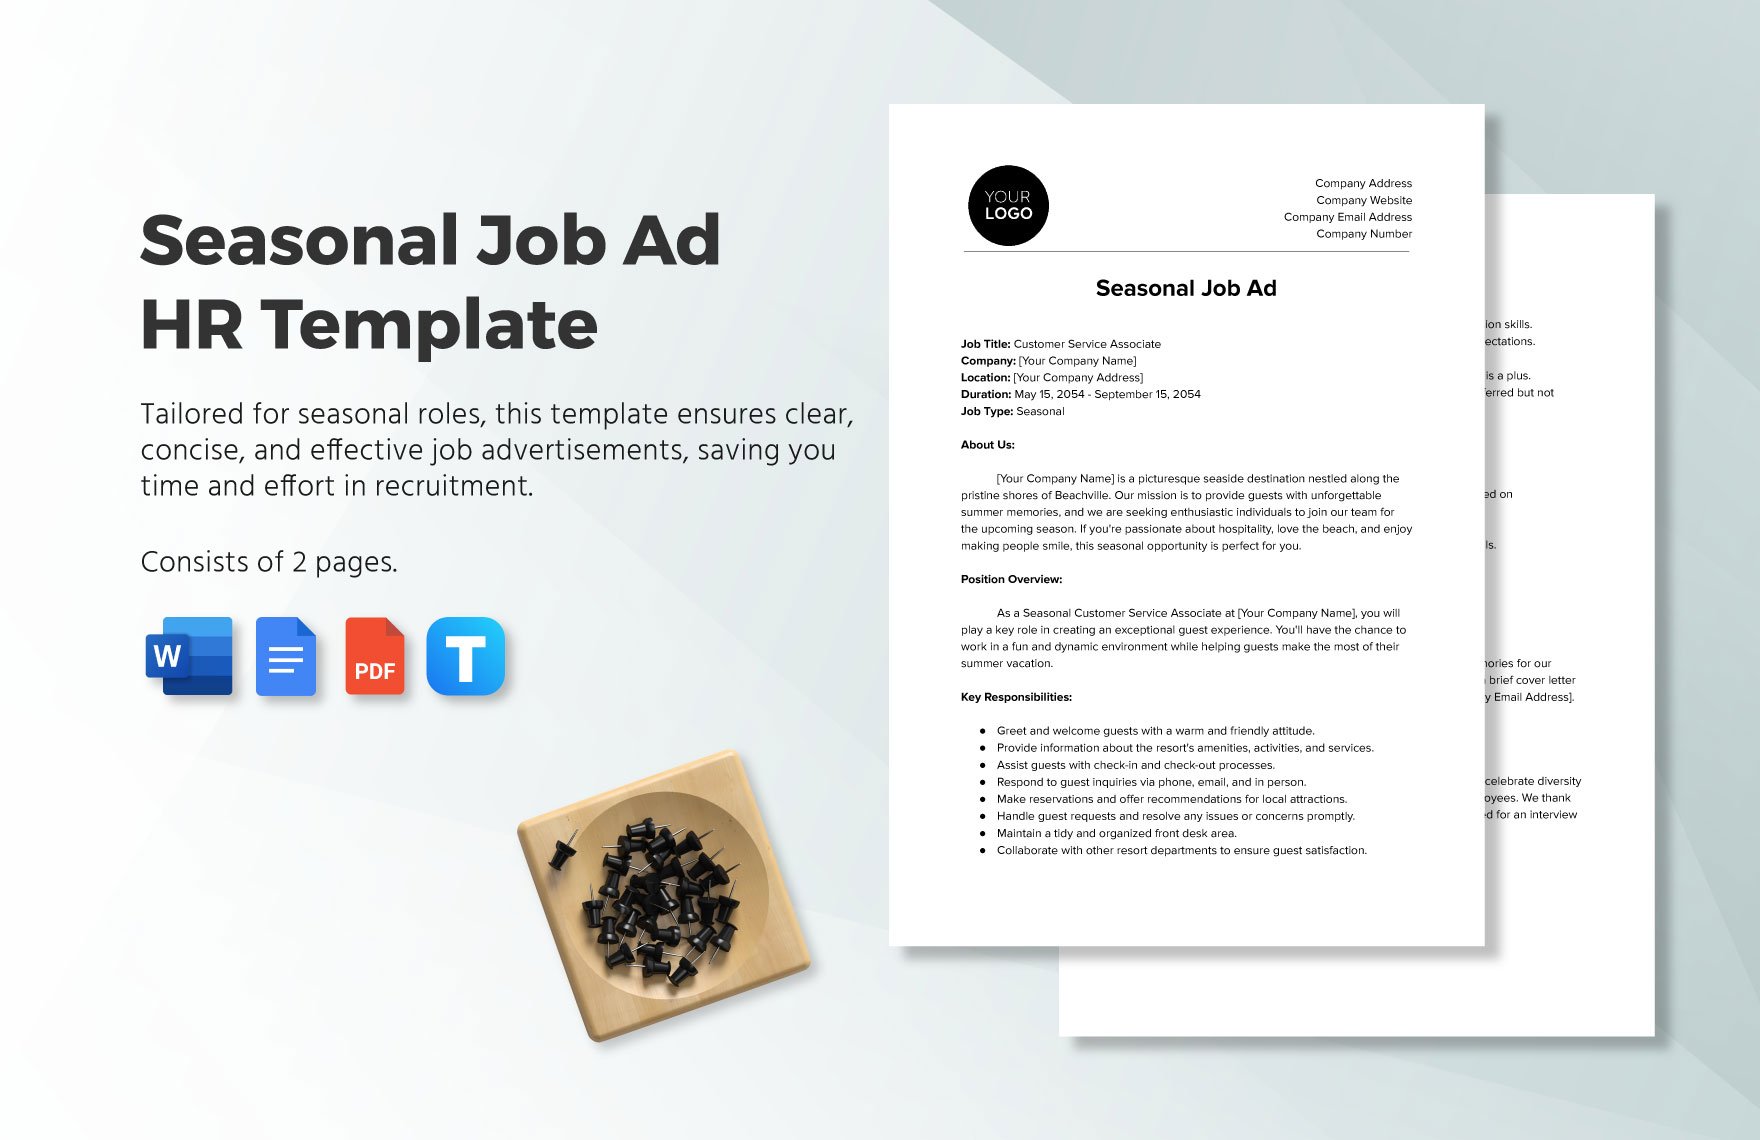 Seasonal Job Ad HR Template